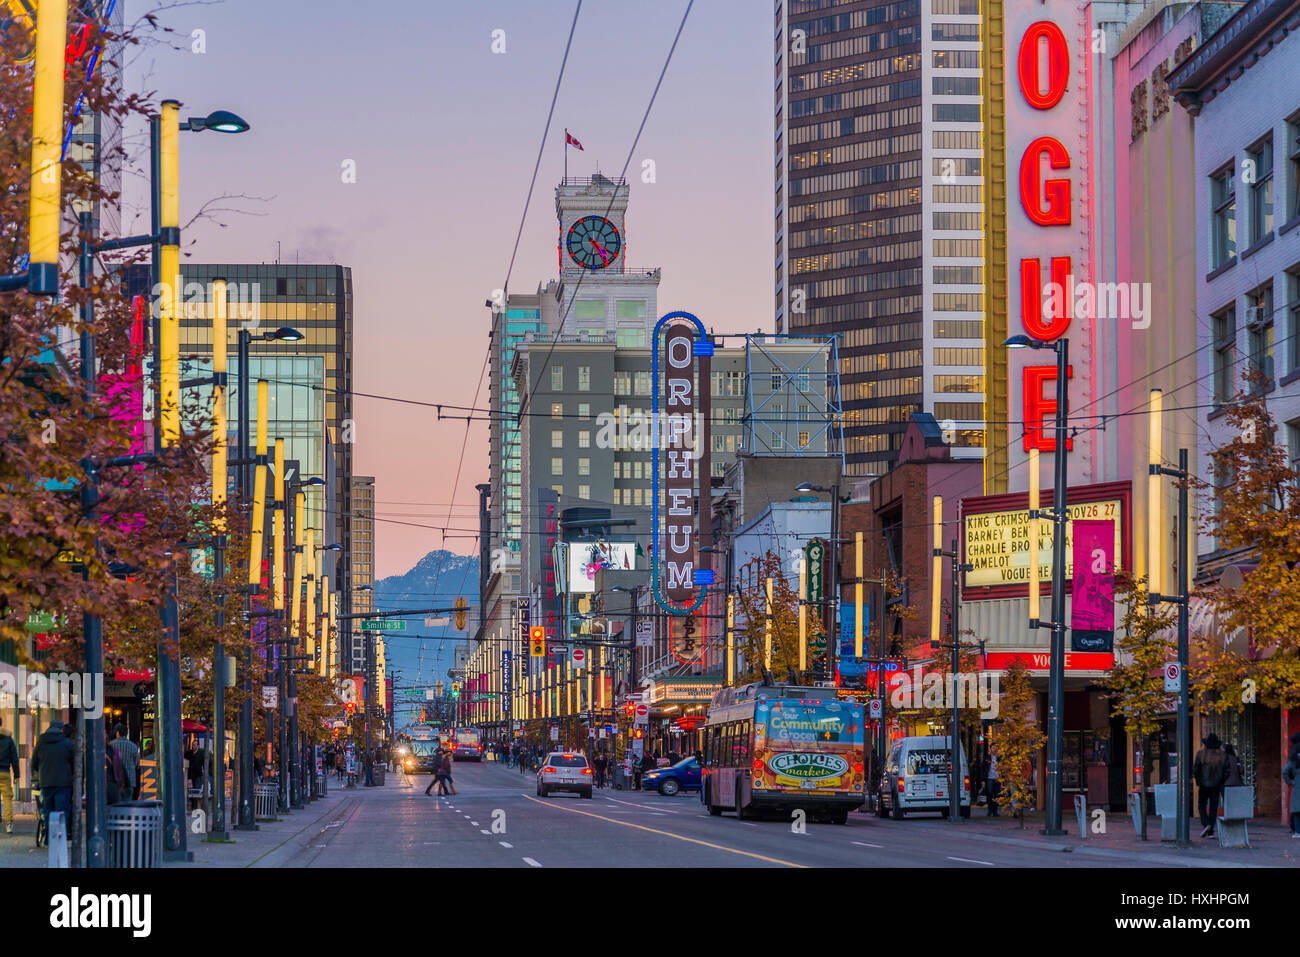 Vogue Theatre, Granville Street, Vancouver, British Columbia, Canada, Stock Photo